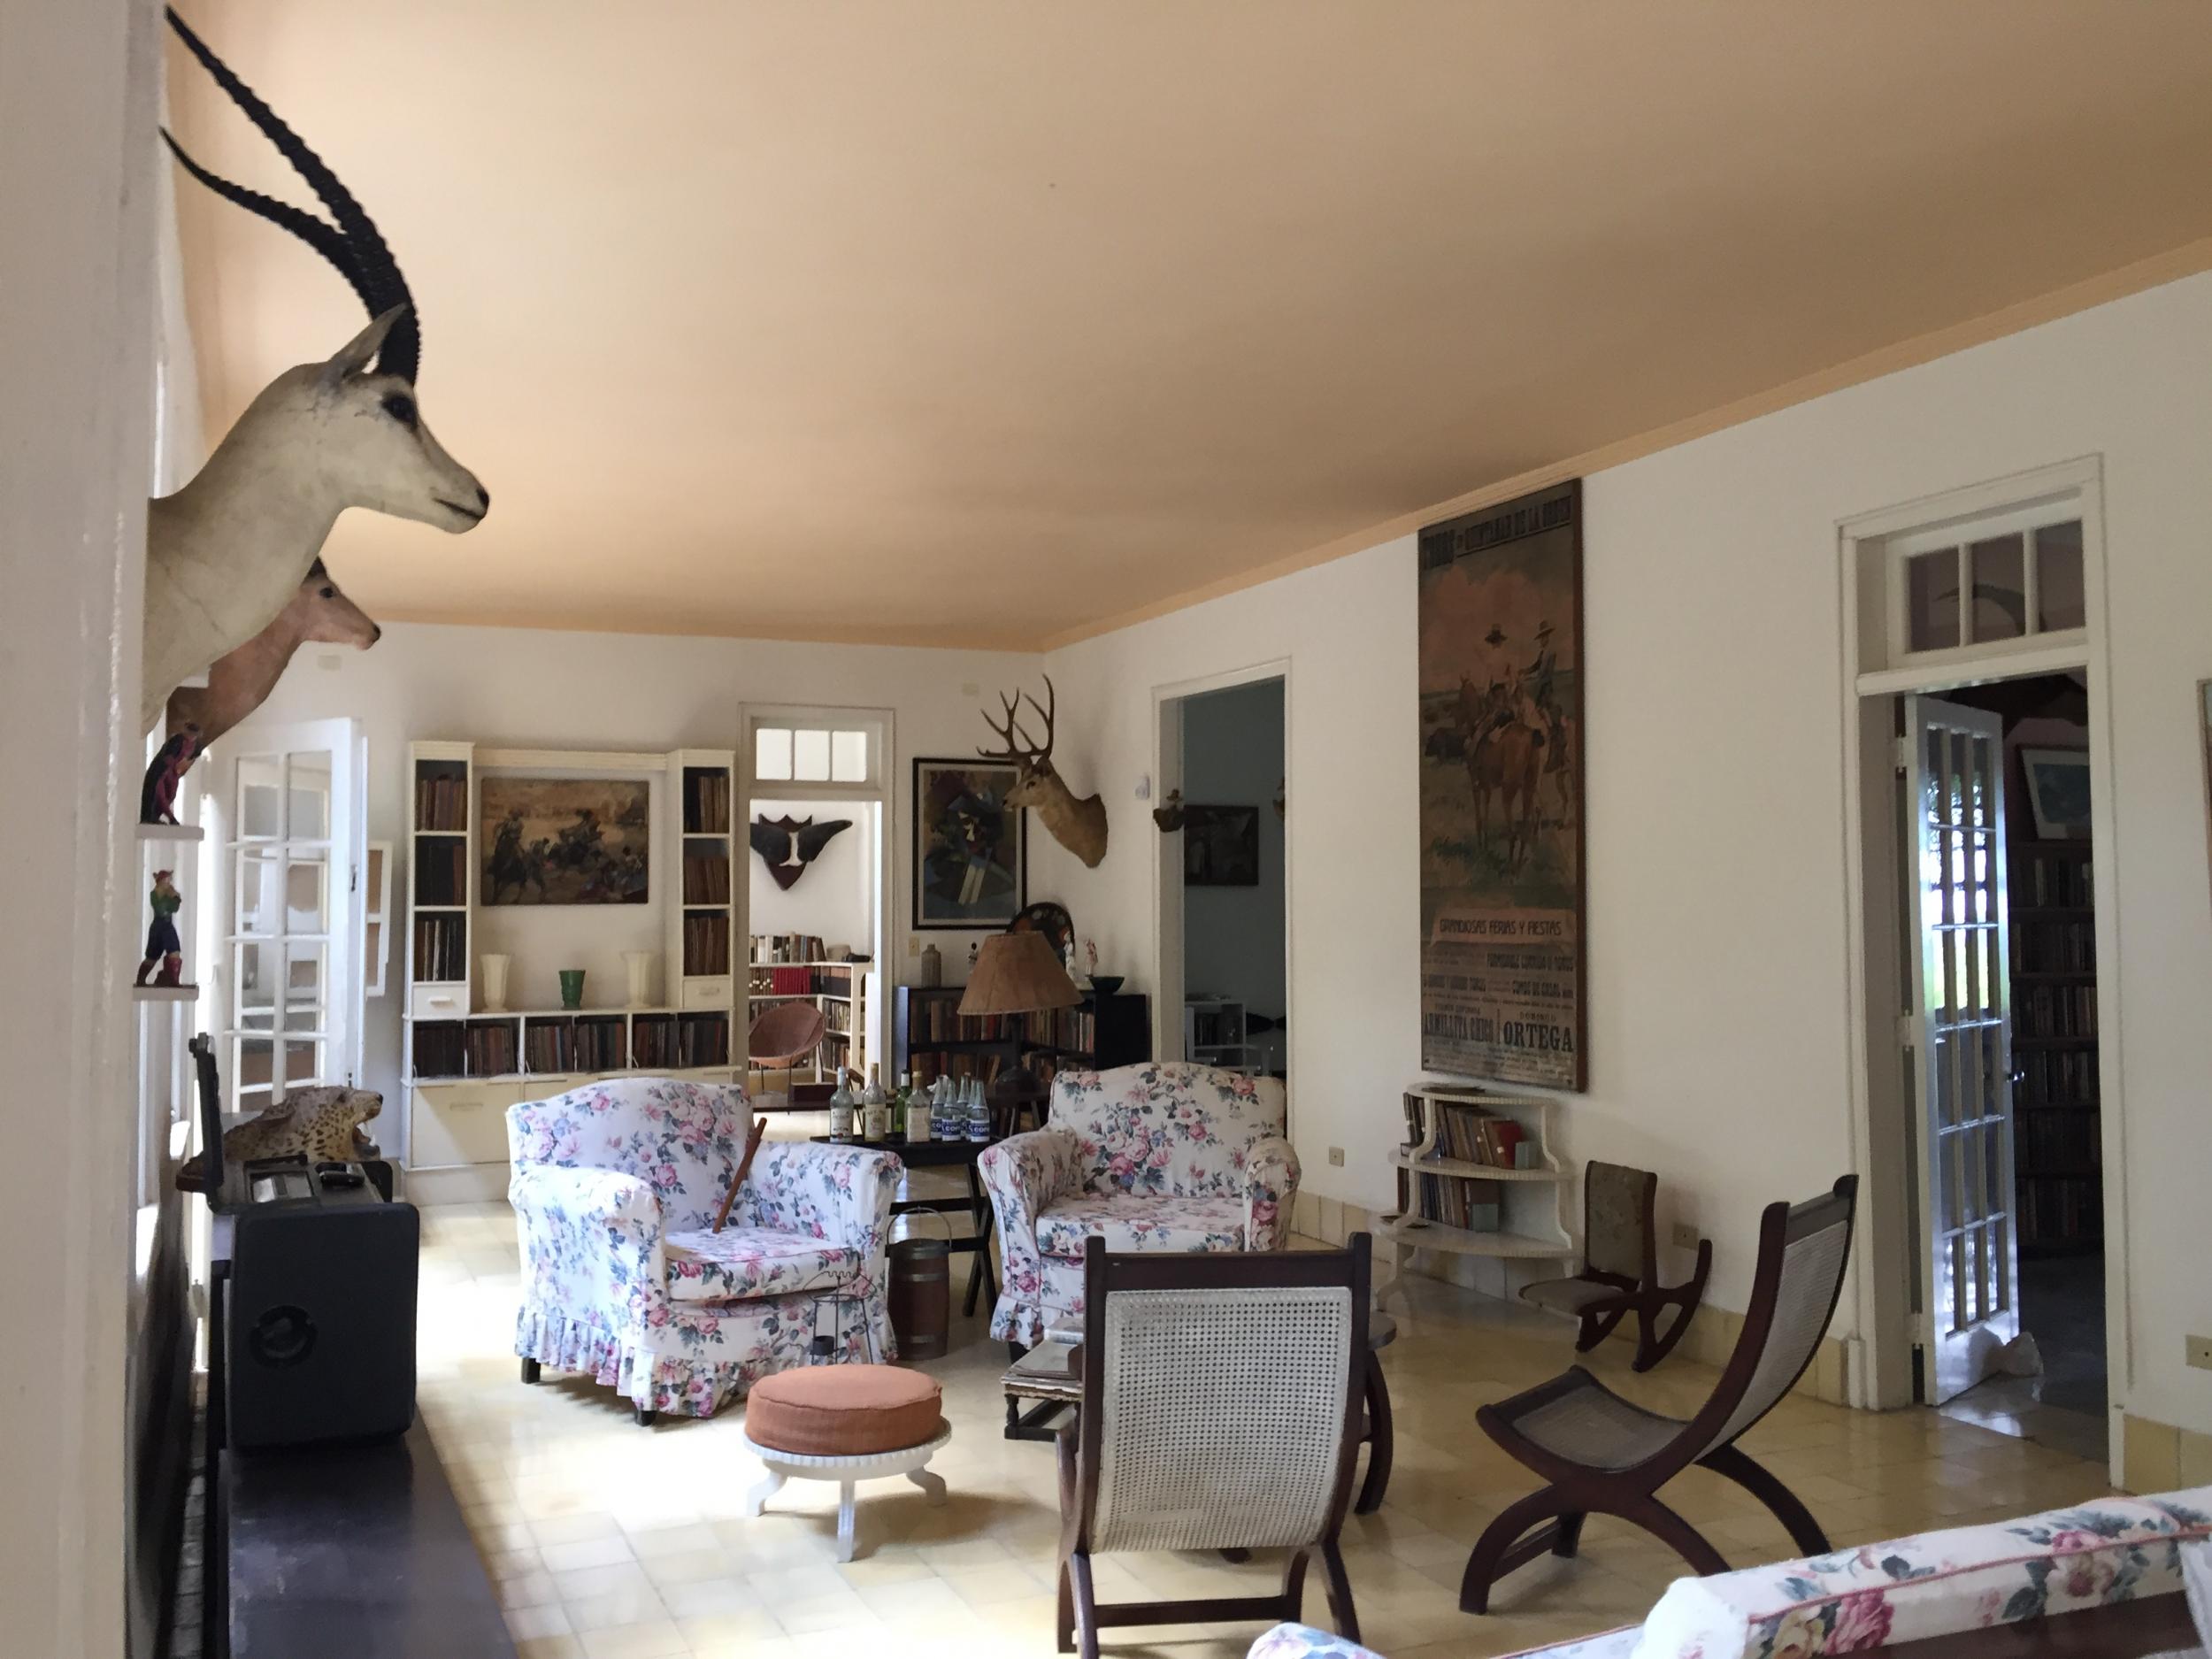 Hemingway settled permanently at Finca Vigia